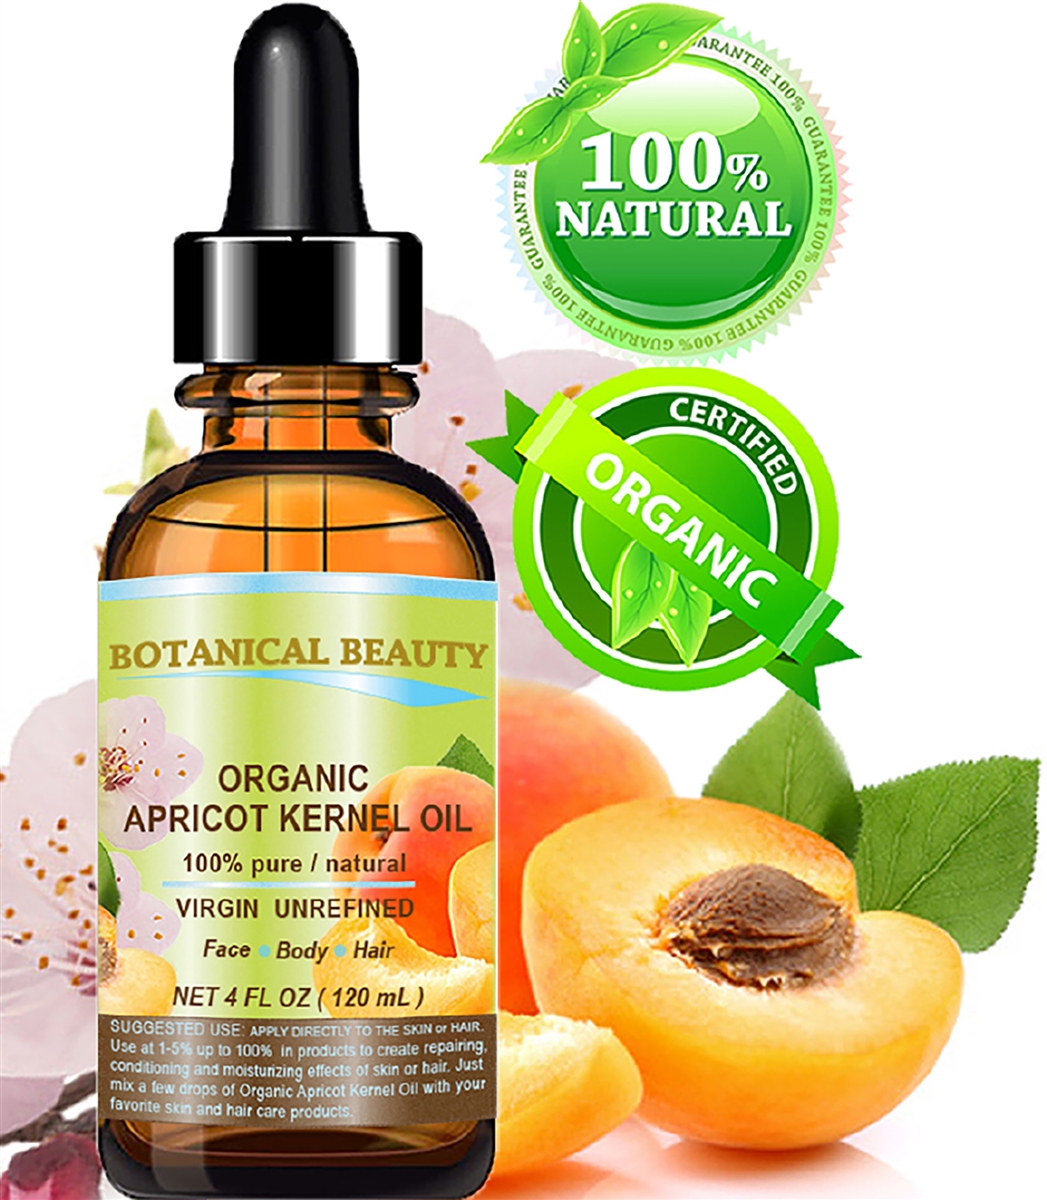 Organic Apricot Kernel Oil Australian Botanical Beauty 4 oz - 120 ml.